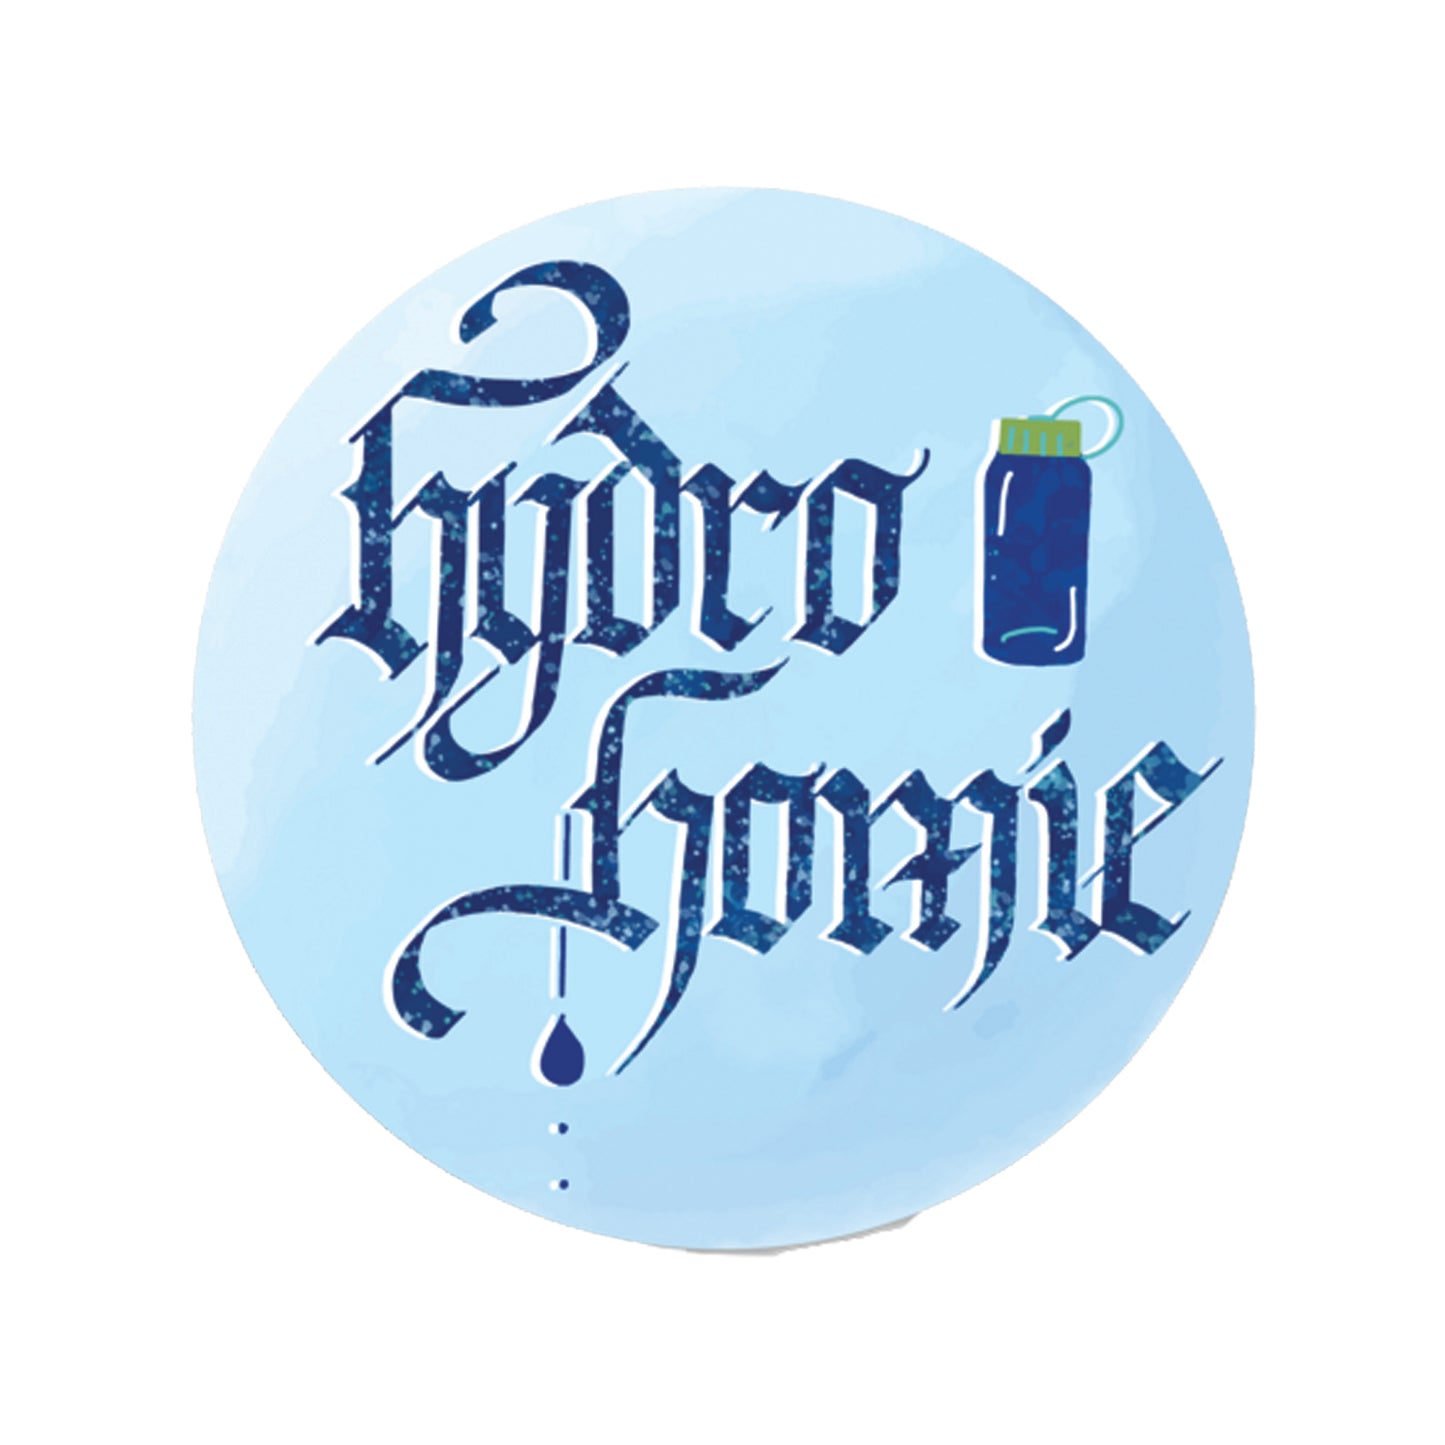 Hydro Homie sticker